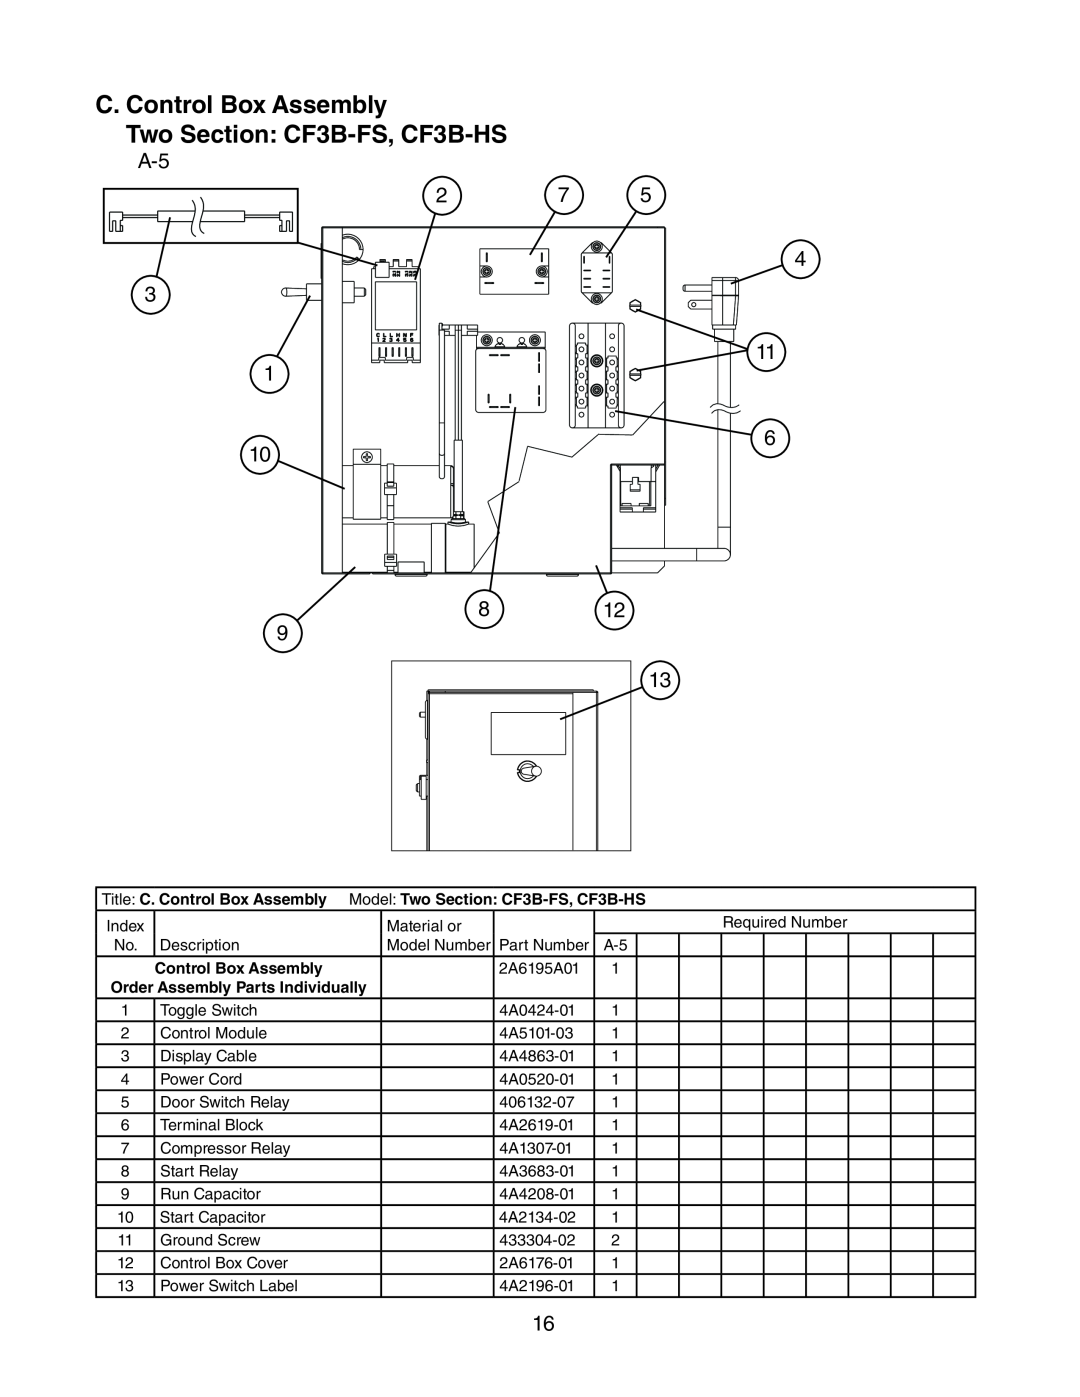 Hoshizaki CR3B-HS, CR3B-FS manual C. Control Box Assembly, Two Section CF3B-FS, CF3B-HS 